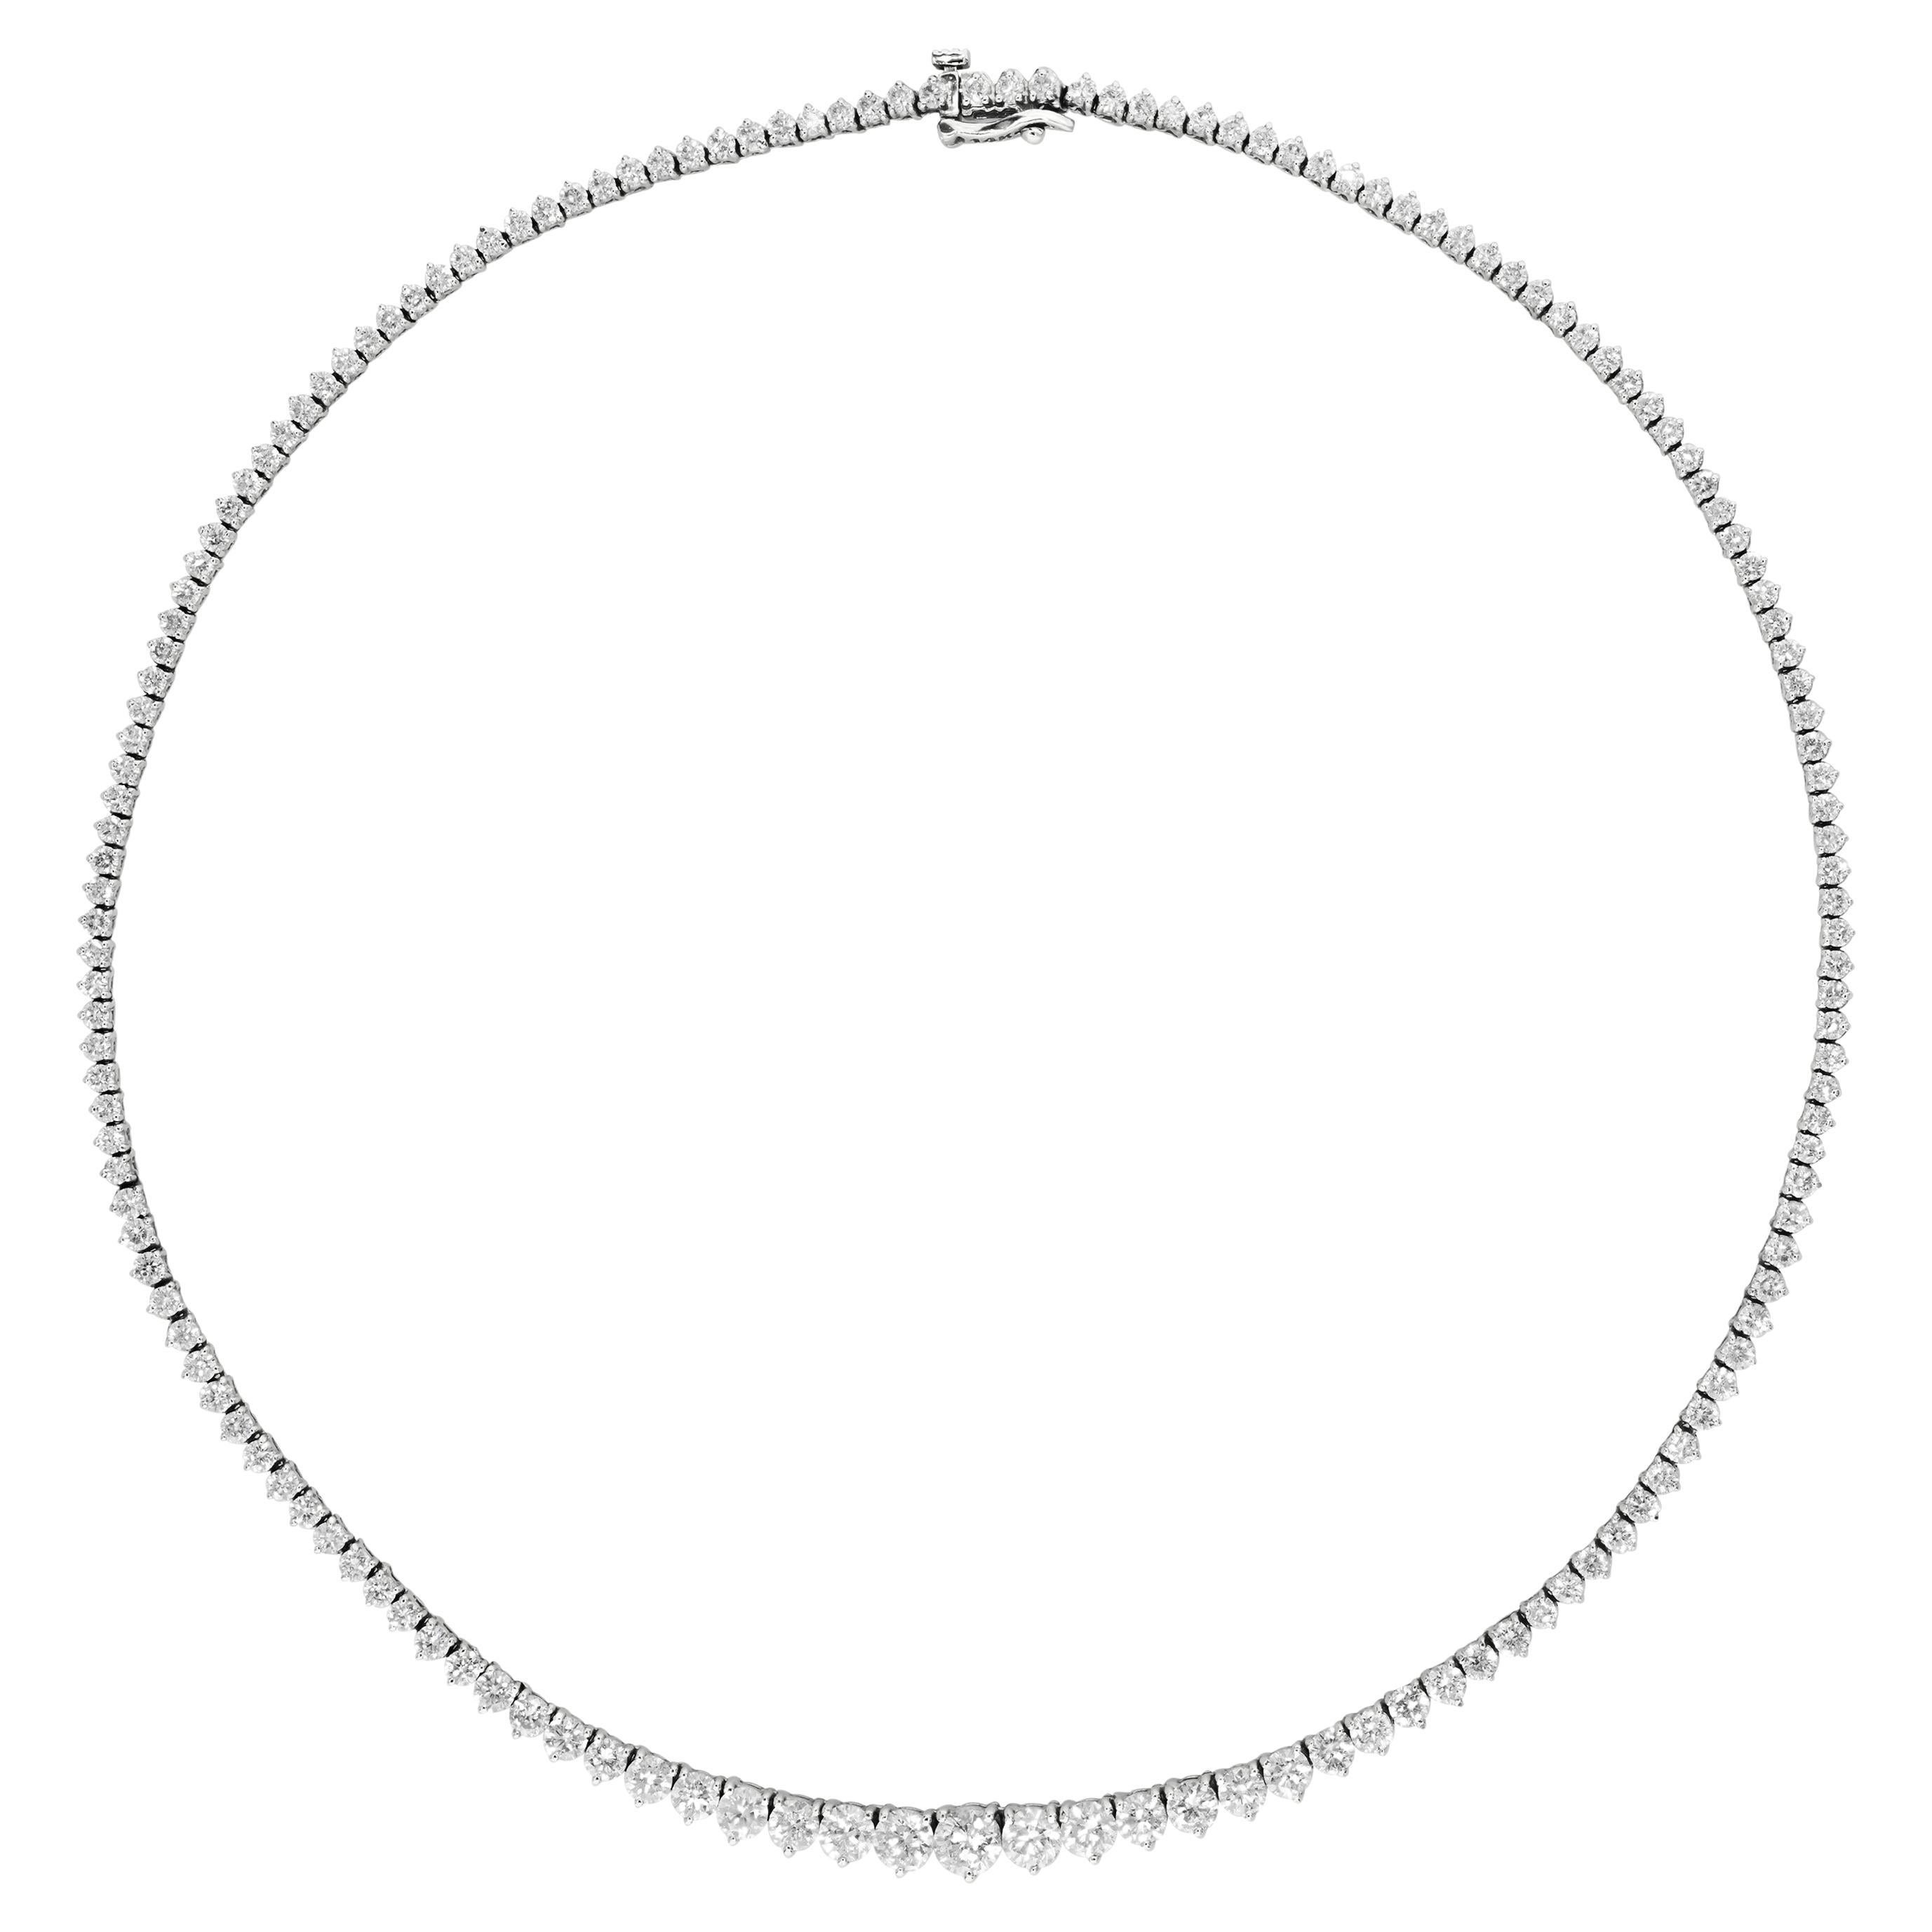 5.9 Carat Graduated Round Diamond Necklace in 14k White Gold